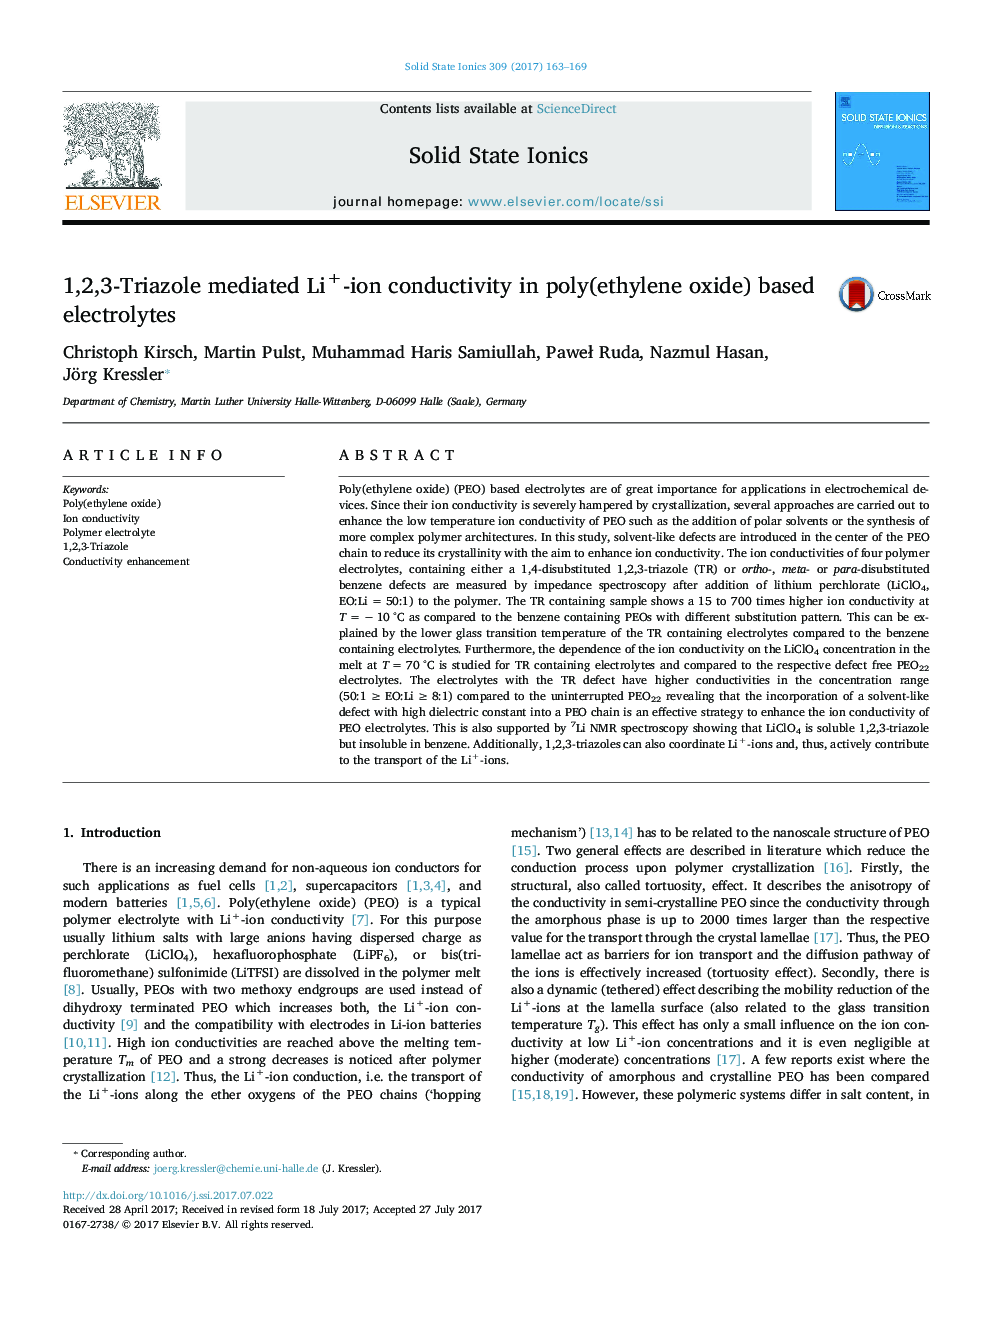 1,2,3-Triazole mediated Li+-ion conductivity in poly(ethylene oxide) based electrolytes